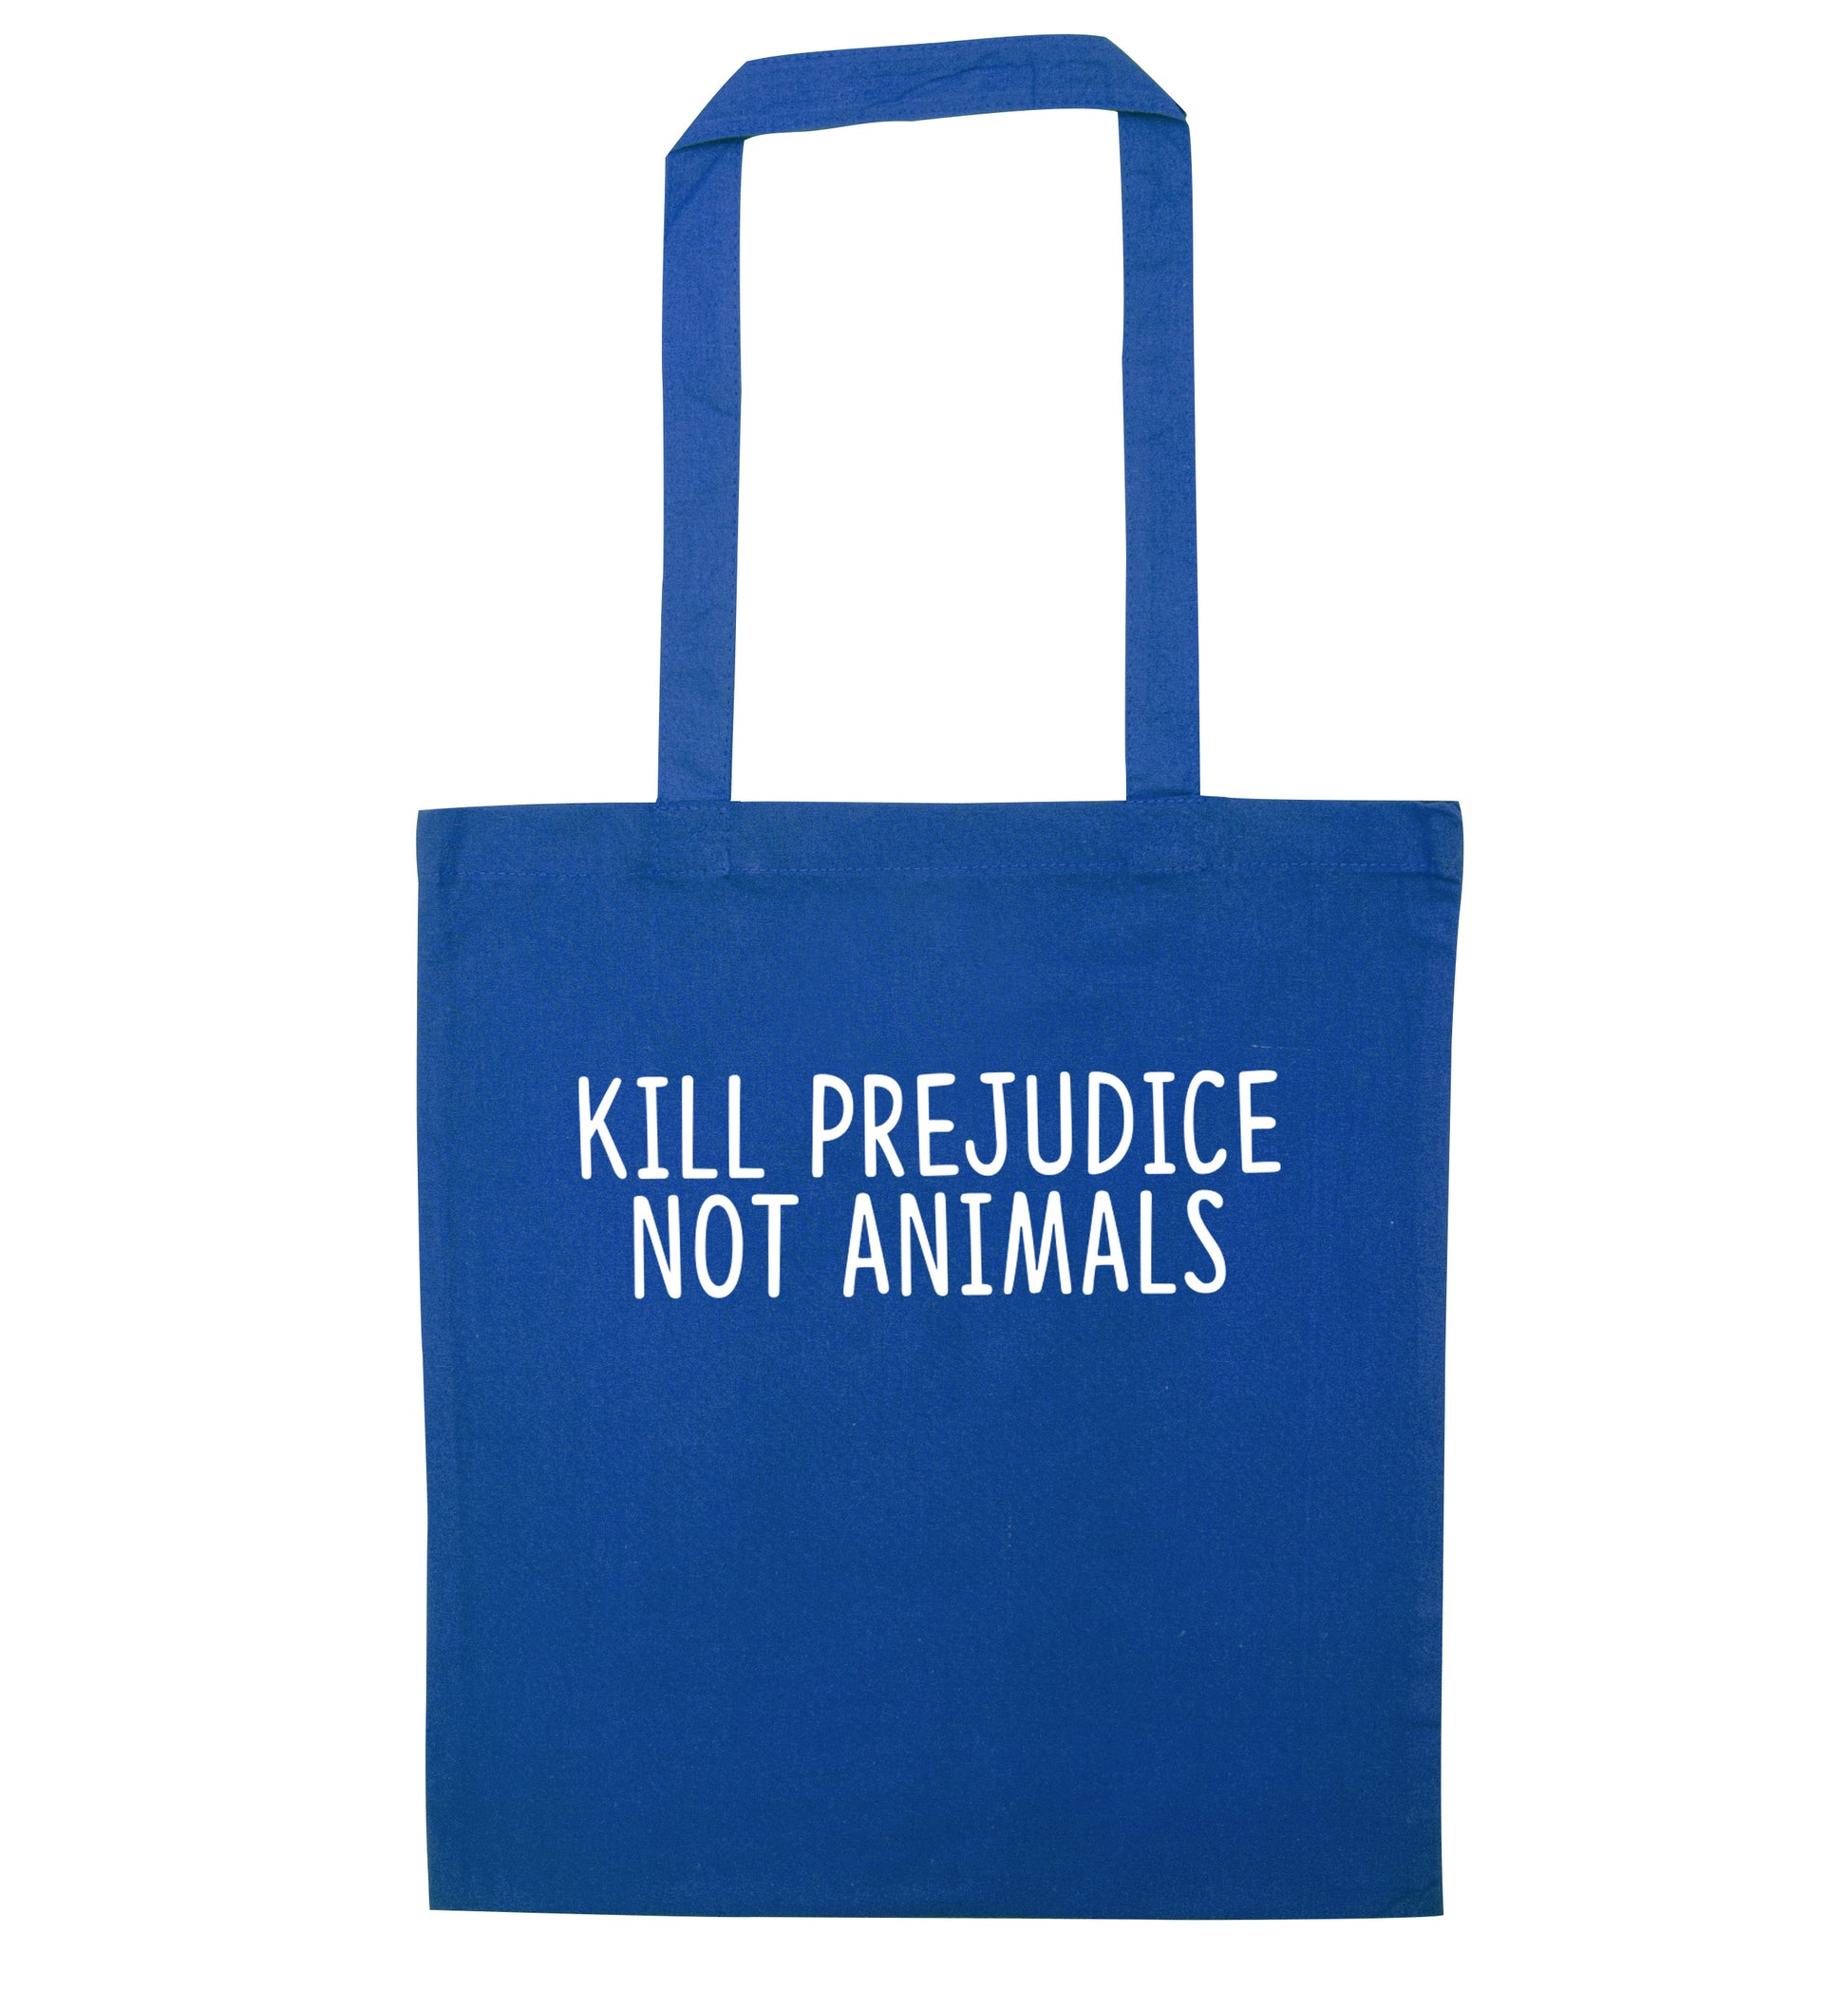 Kill Prejudice Not Animals blue tote bag